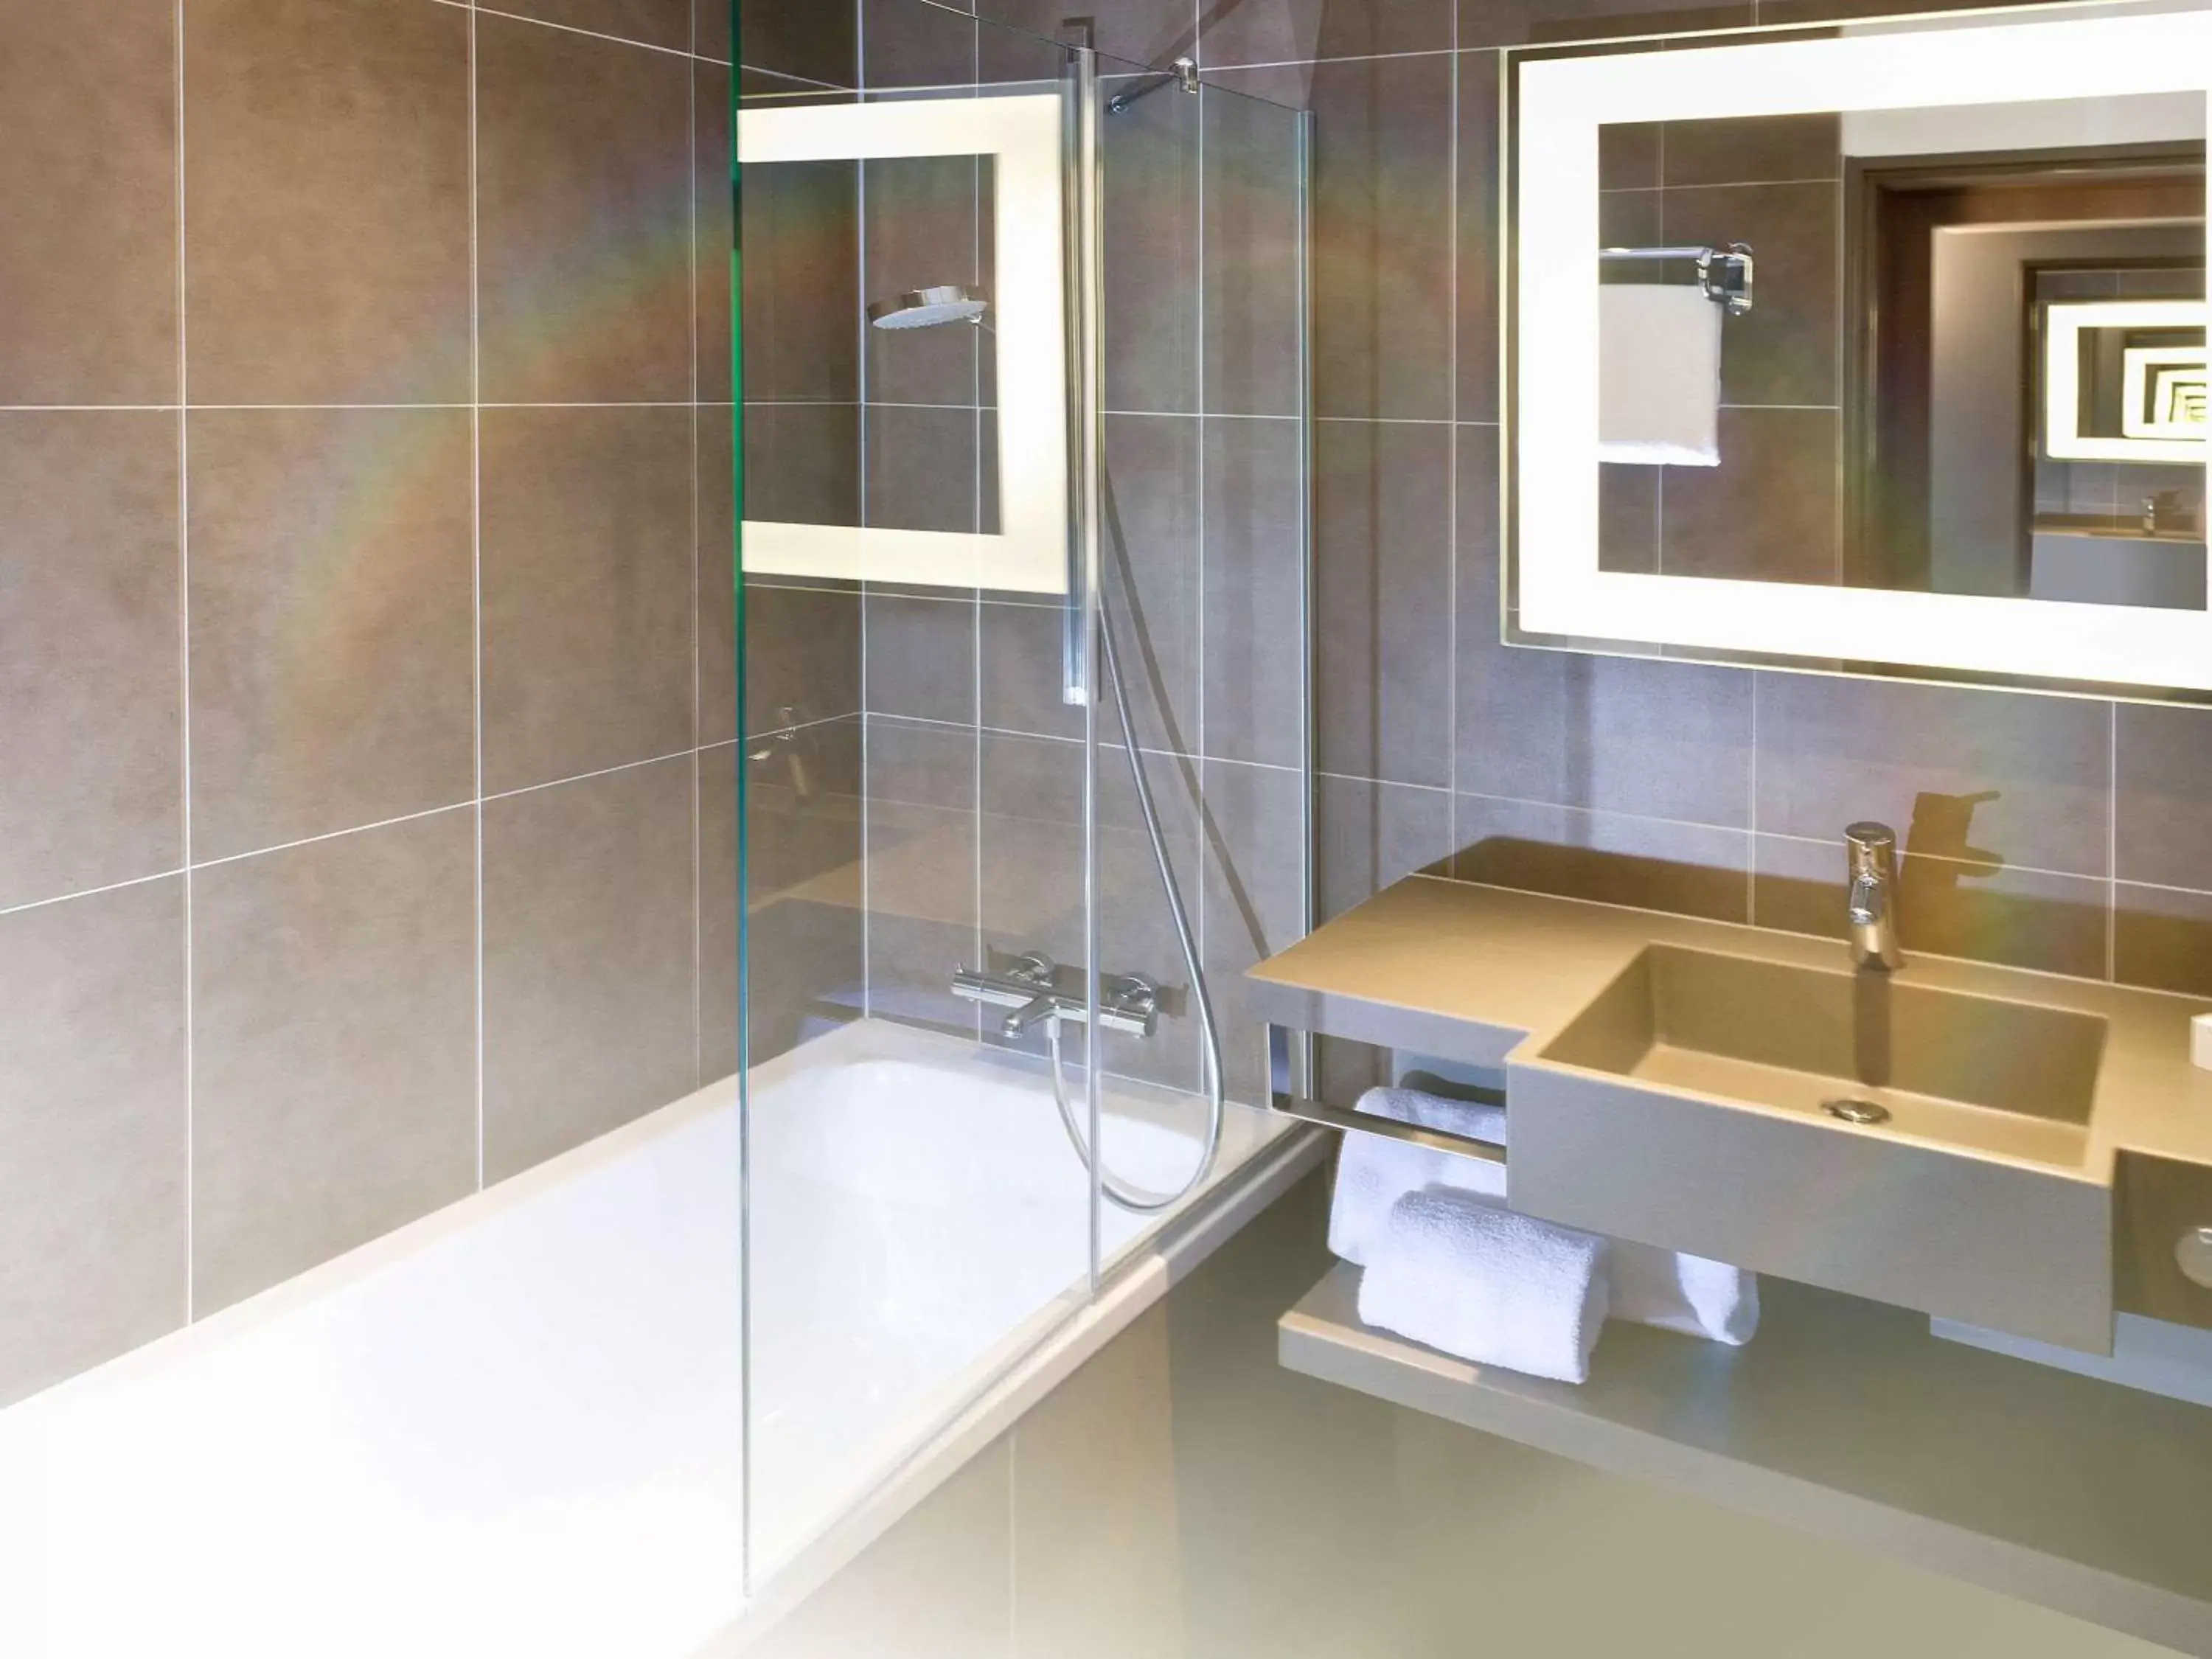 Photo of the whole room, Bathroom in Novotel London Blackfriars